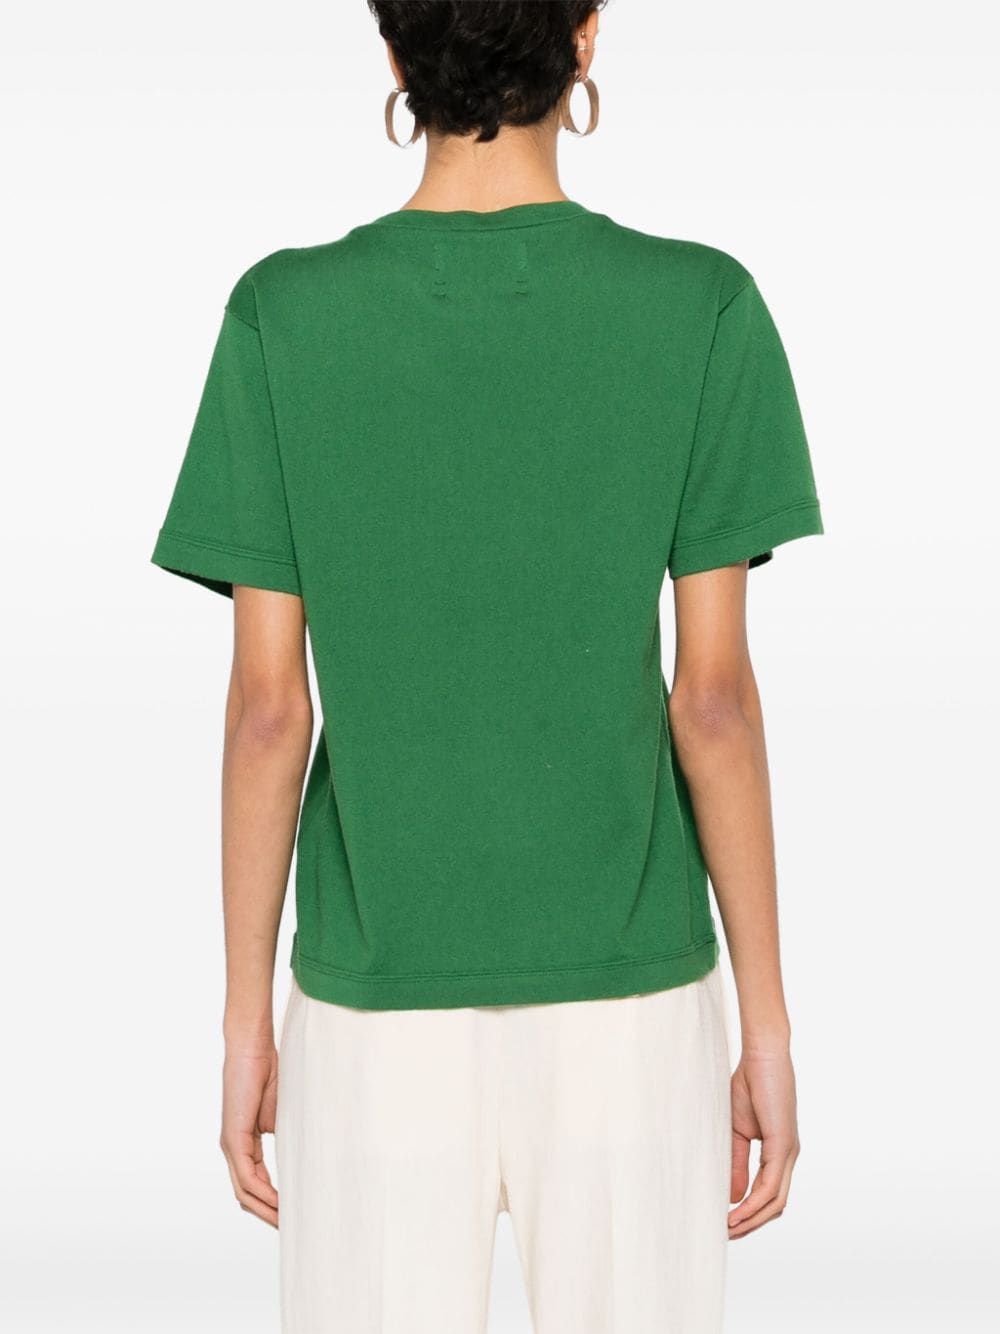 extreme cashmere n°292 America T-shirt Groen